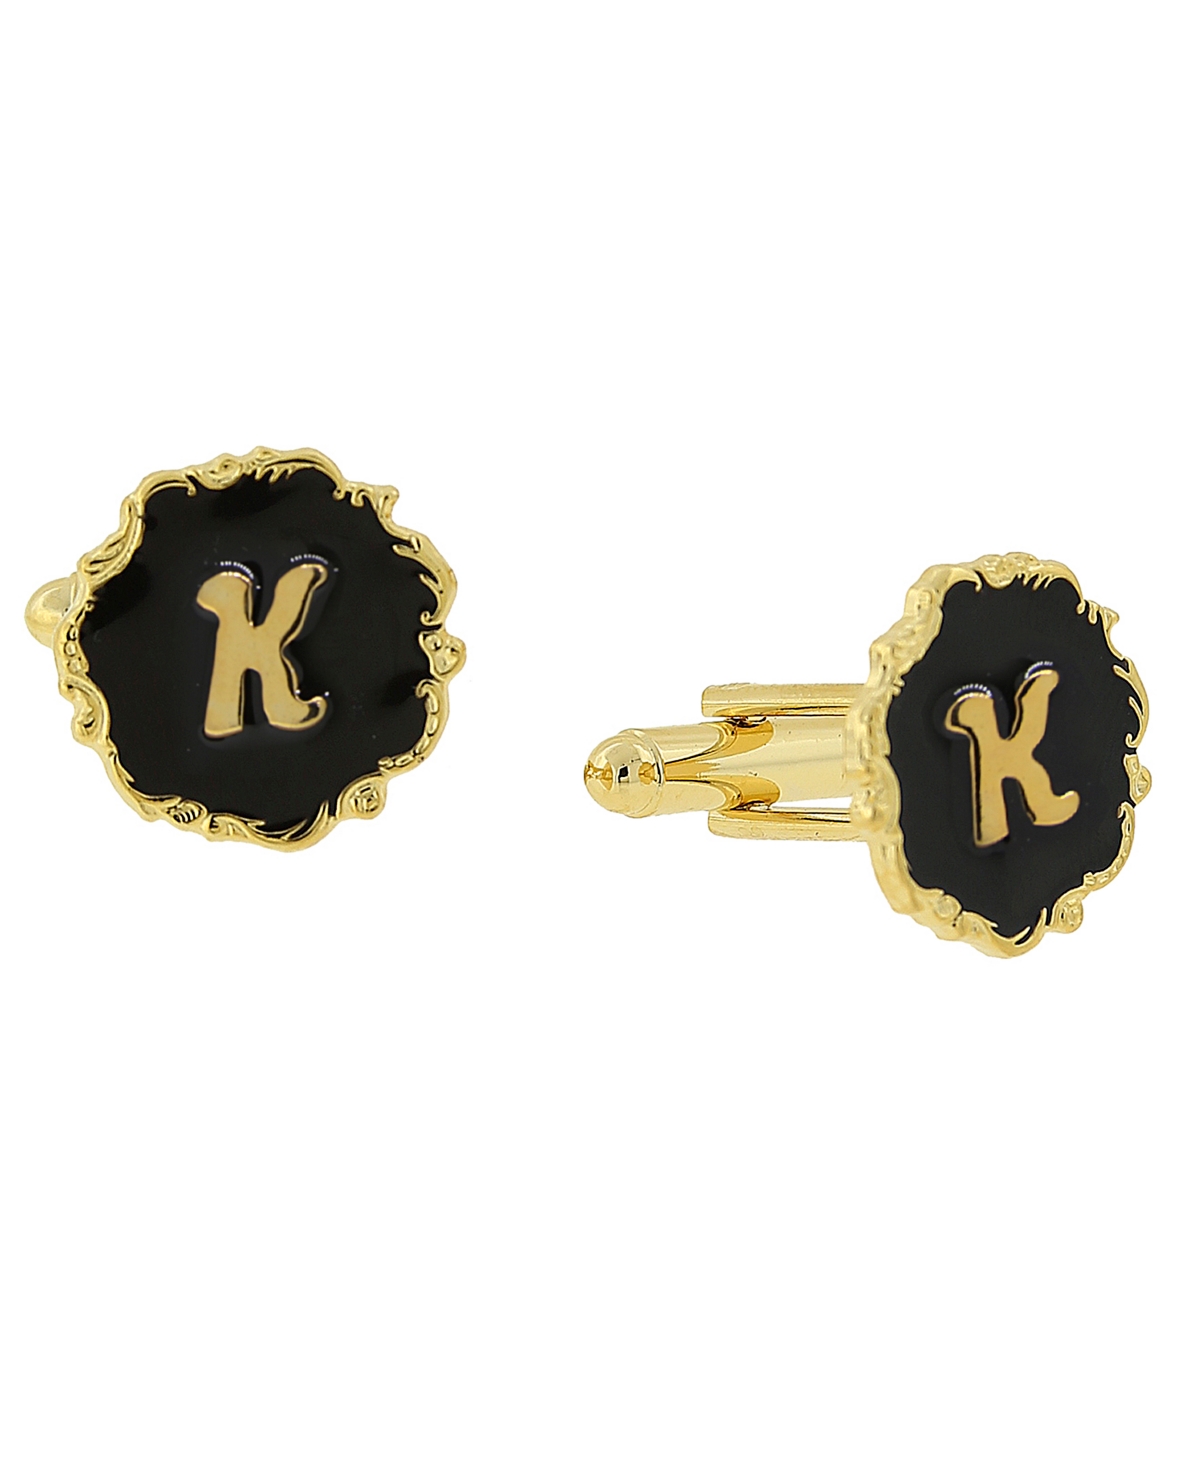 Jewelry 14K Gold-Plated Enamel Initial K Cufflinks - Black